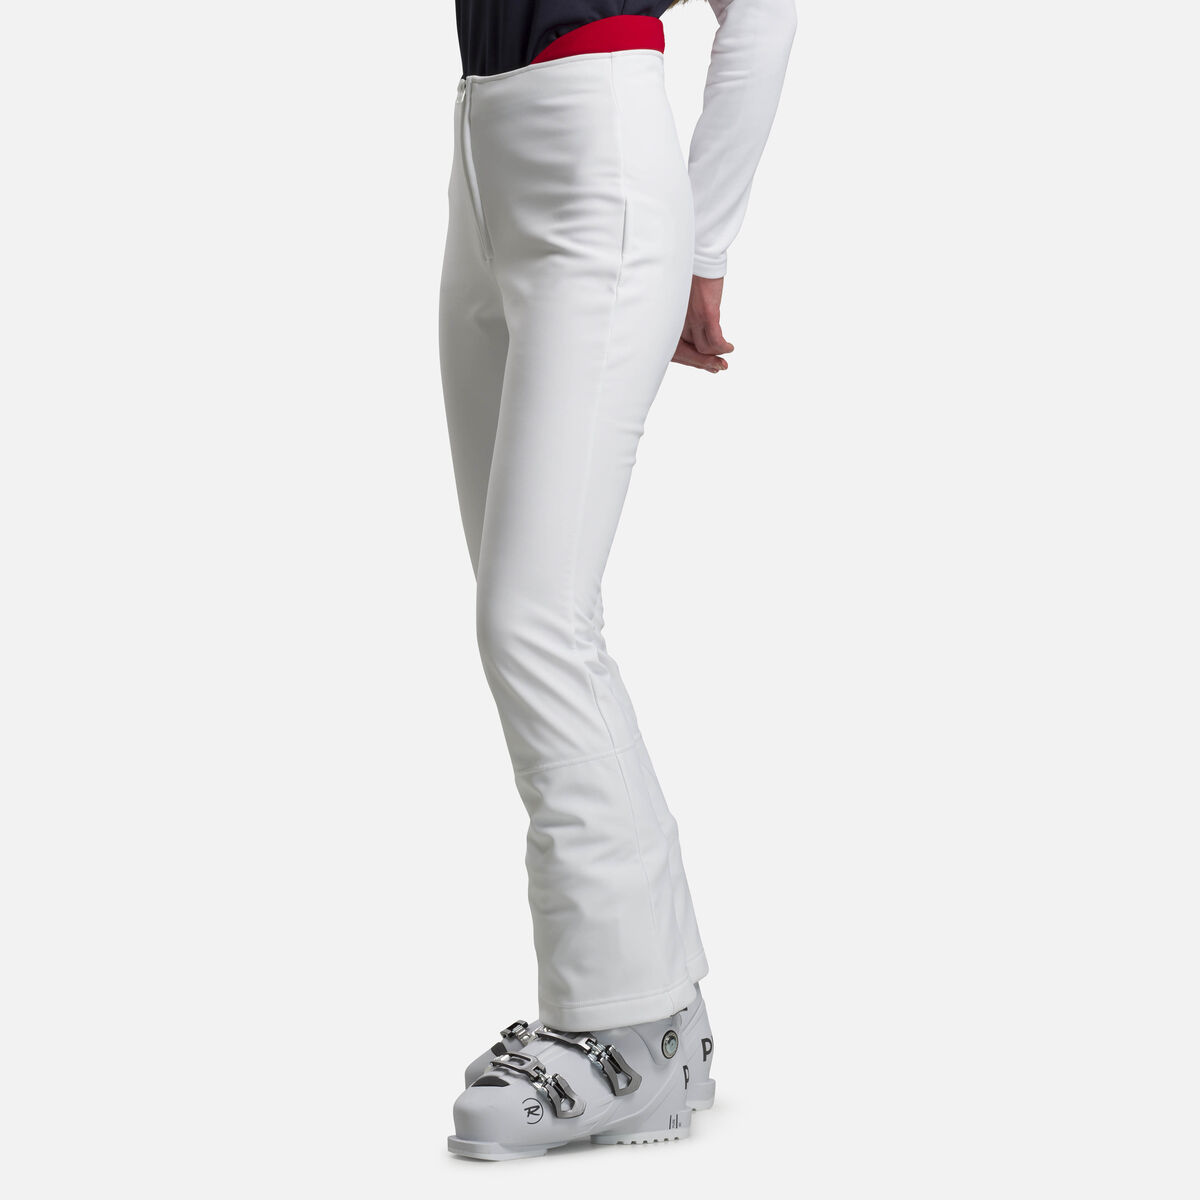 Rossignol Women's Medaille Ski Pants white